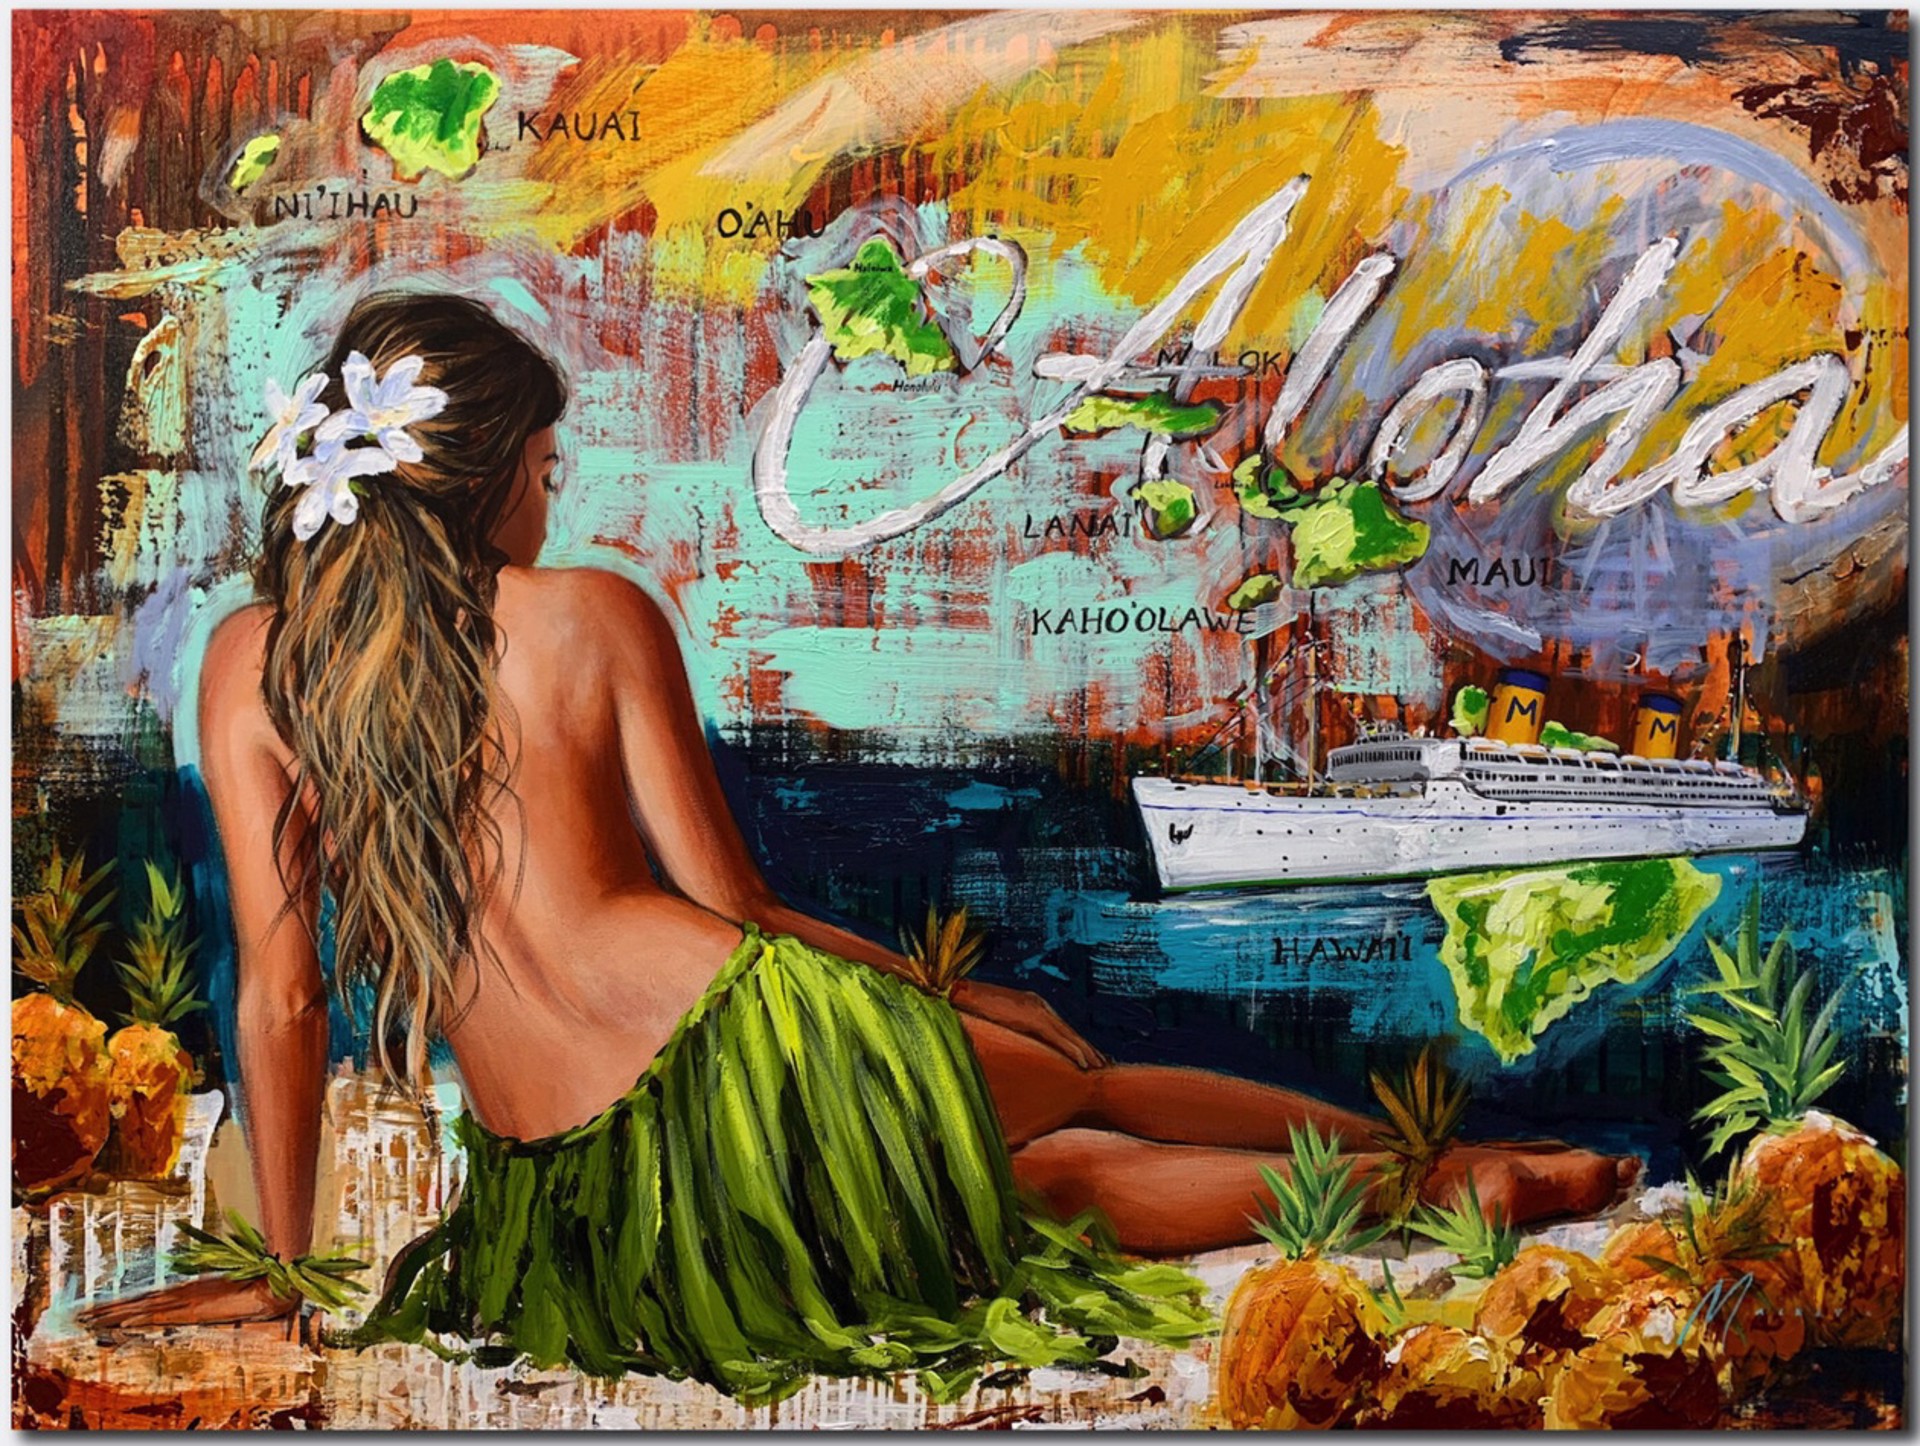 Aloha Voyager by Shawn Mackey